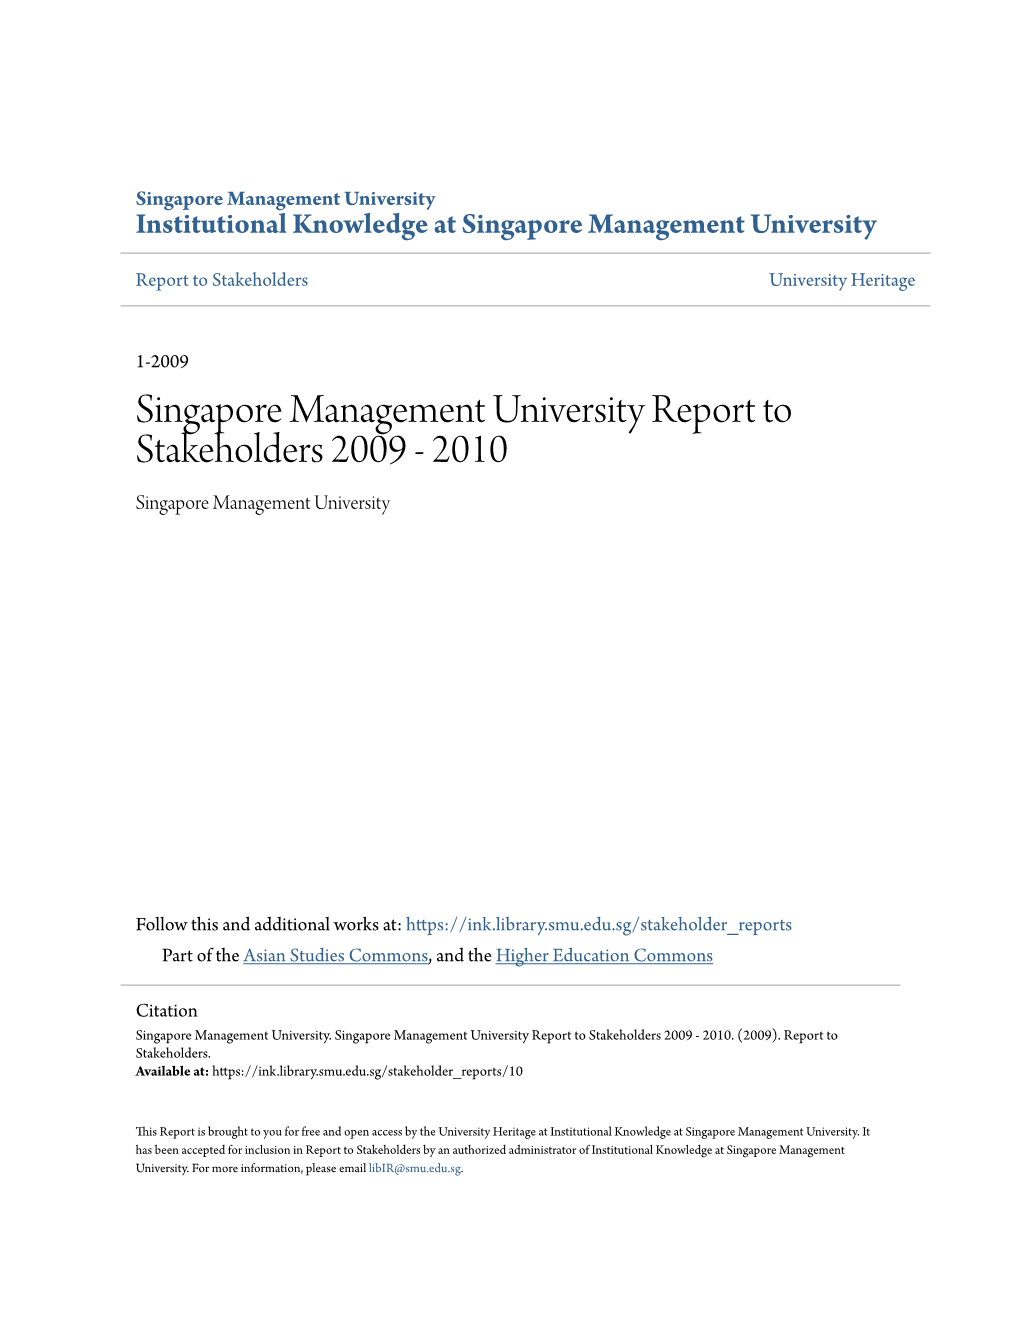 Singapore Management University Report to Stakeholders 2009 - 2010 Singapore Management University